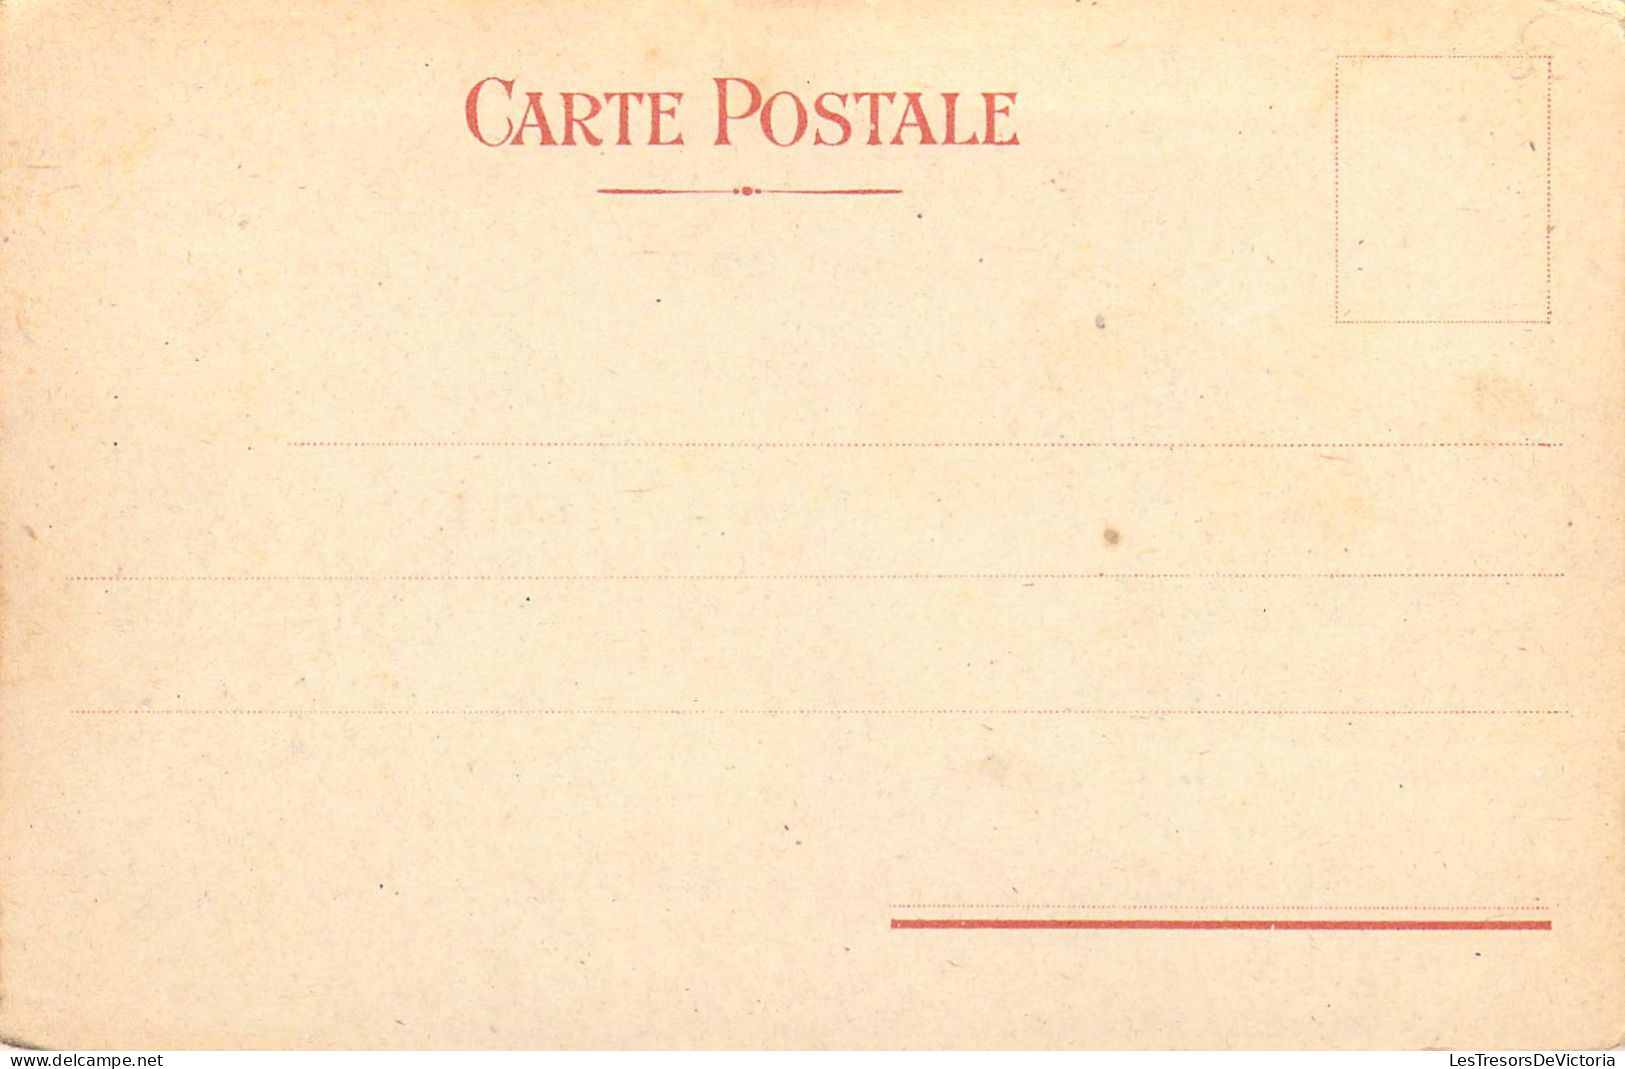 ITALIE - Napoli - Porte Capuana - Carte Postale Ancienne - Napoli (Neapel)